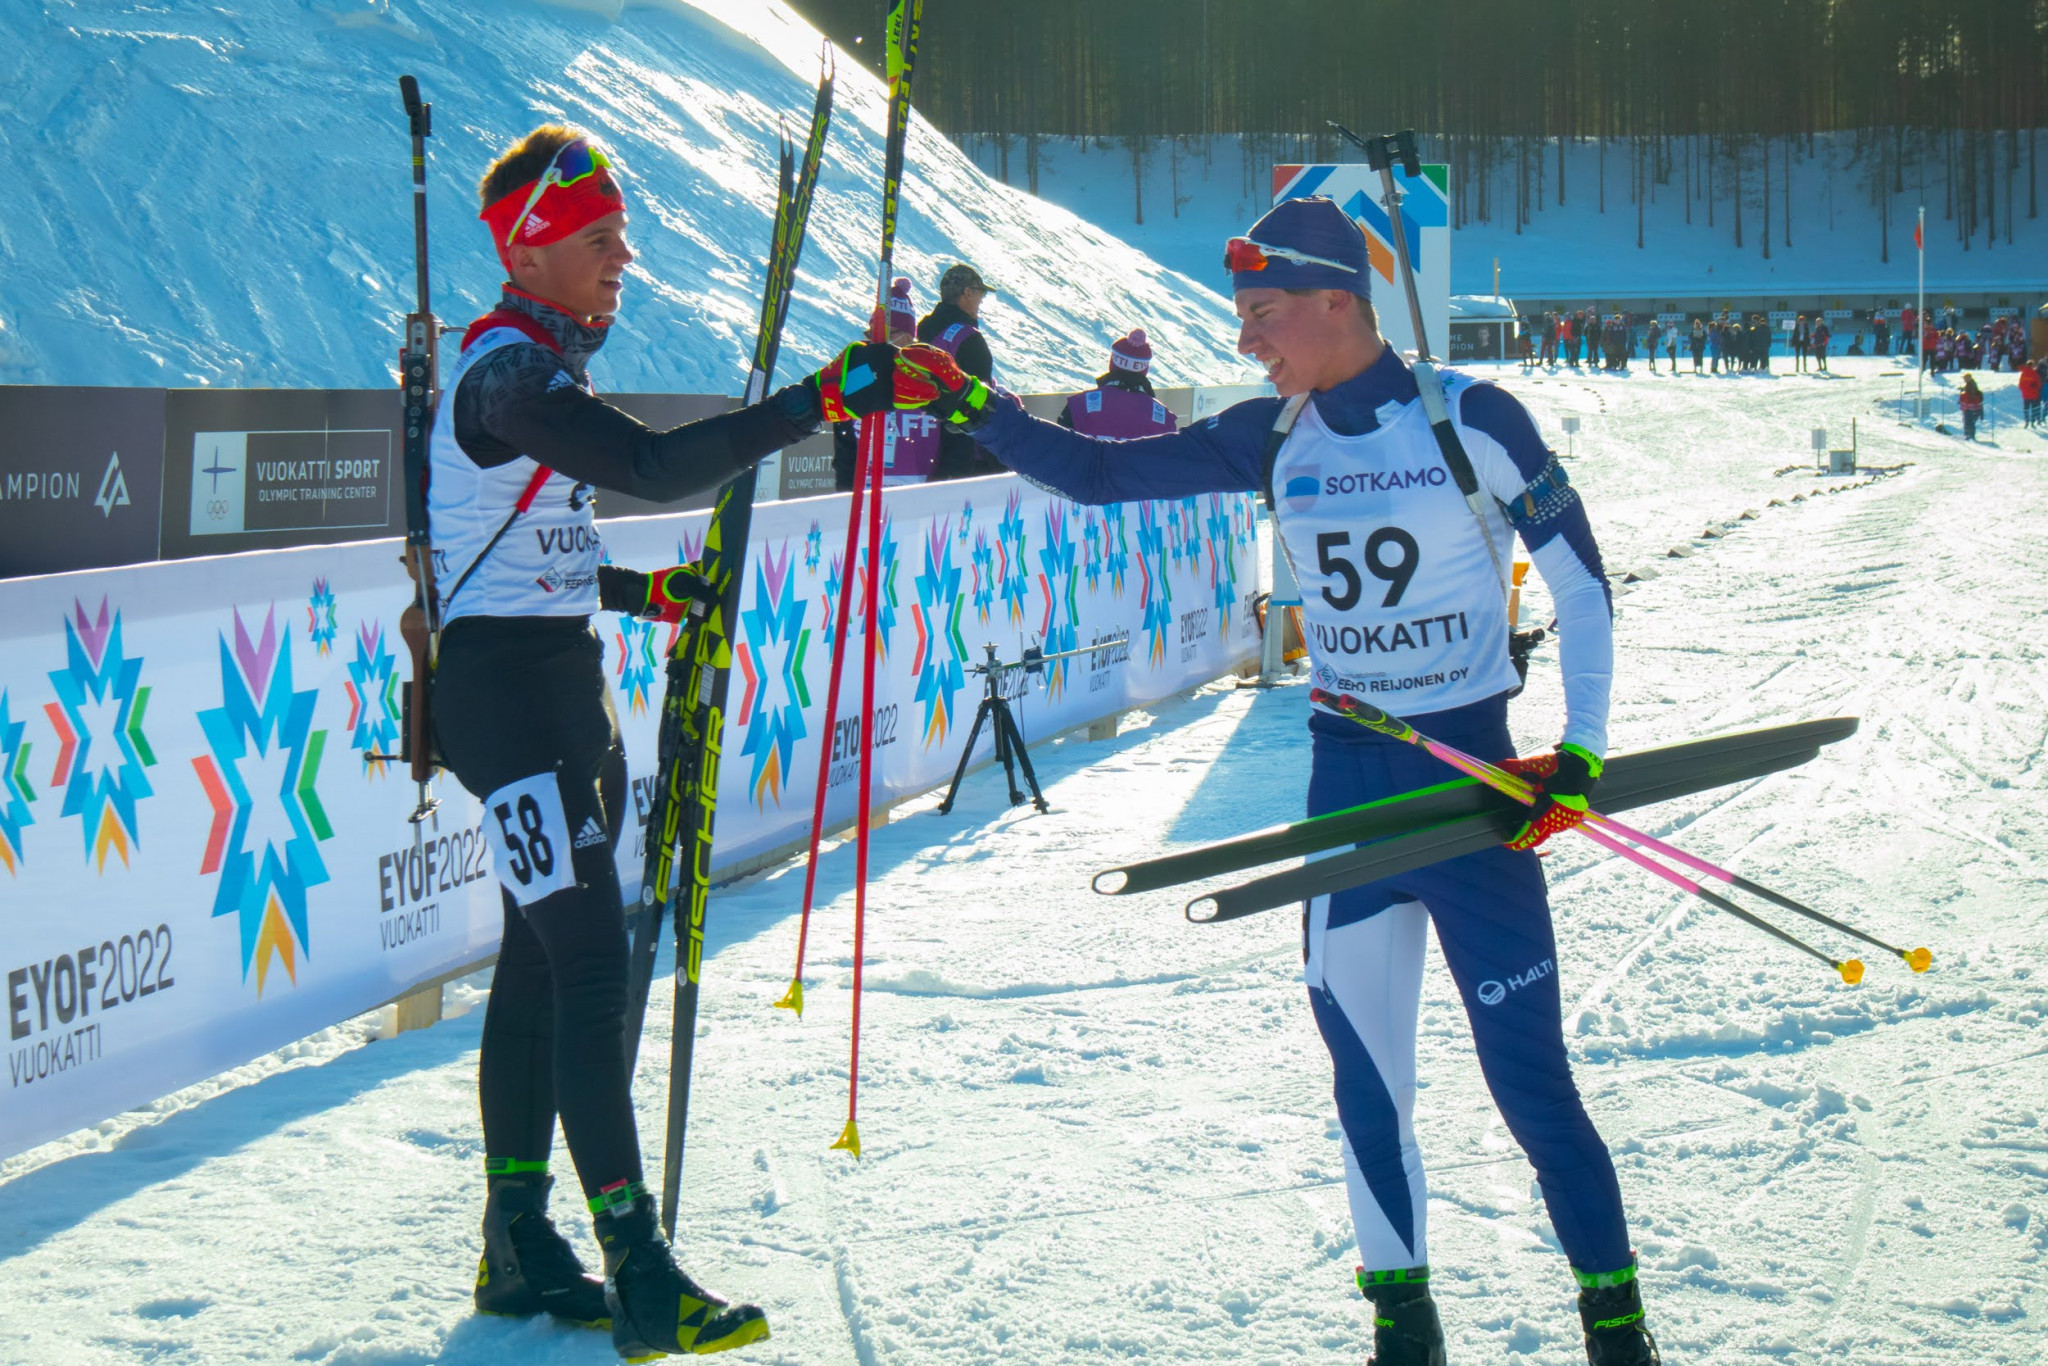 Germany's Paul Gunther, left, and Finland's Arttu Heikkinen, right, embrace at the finish line of the men's sprint 7.5k race on the first day of biathlon competition ©Konsta Koivisto/EYOF 2022 Vuokatti